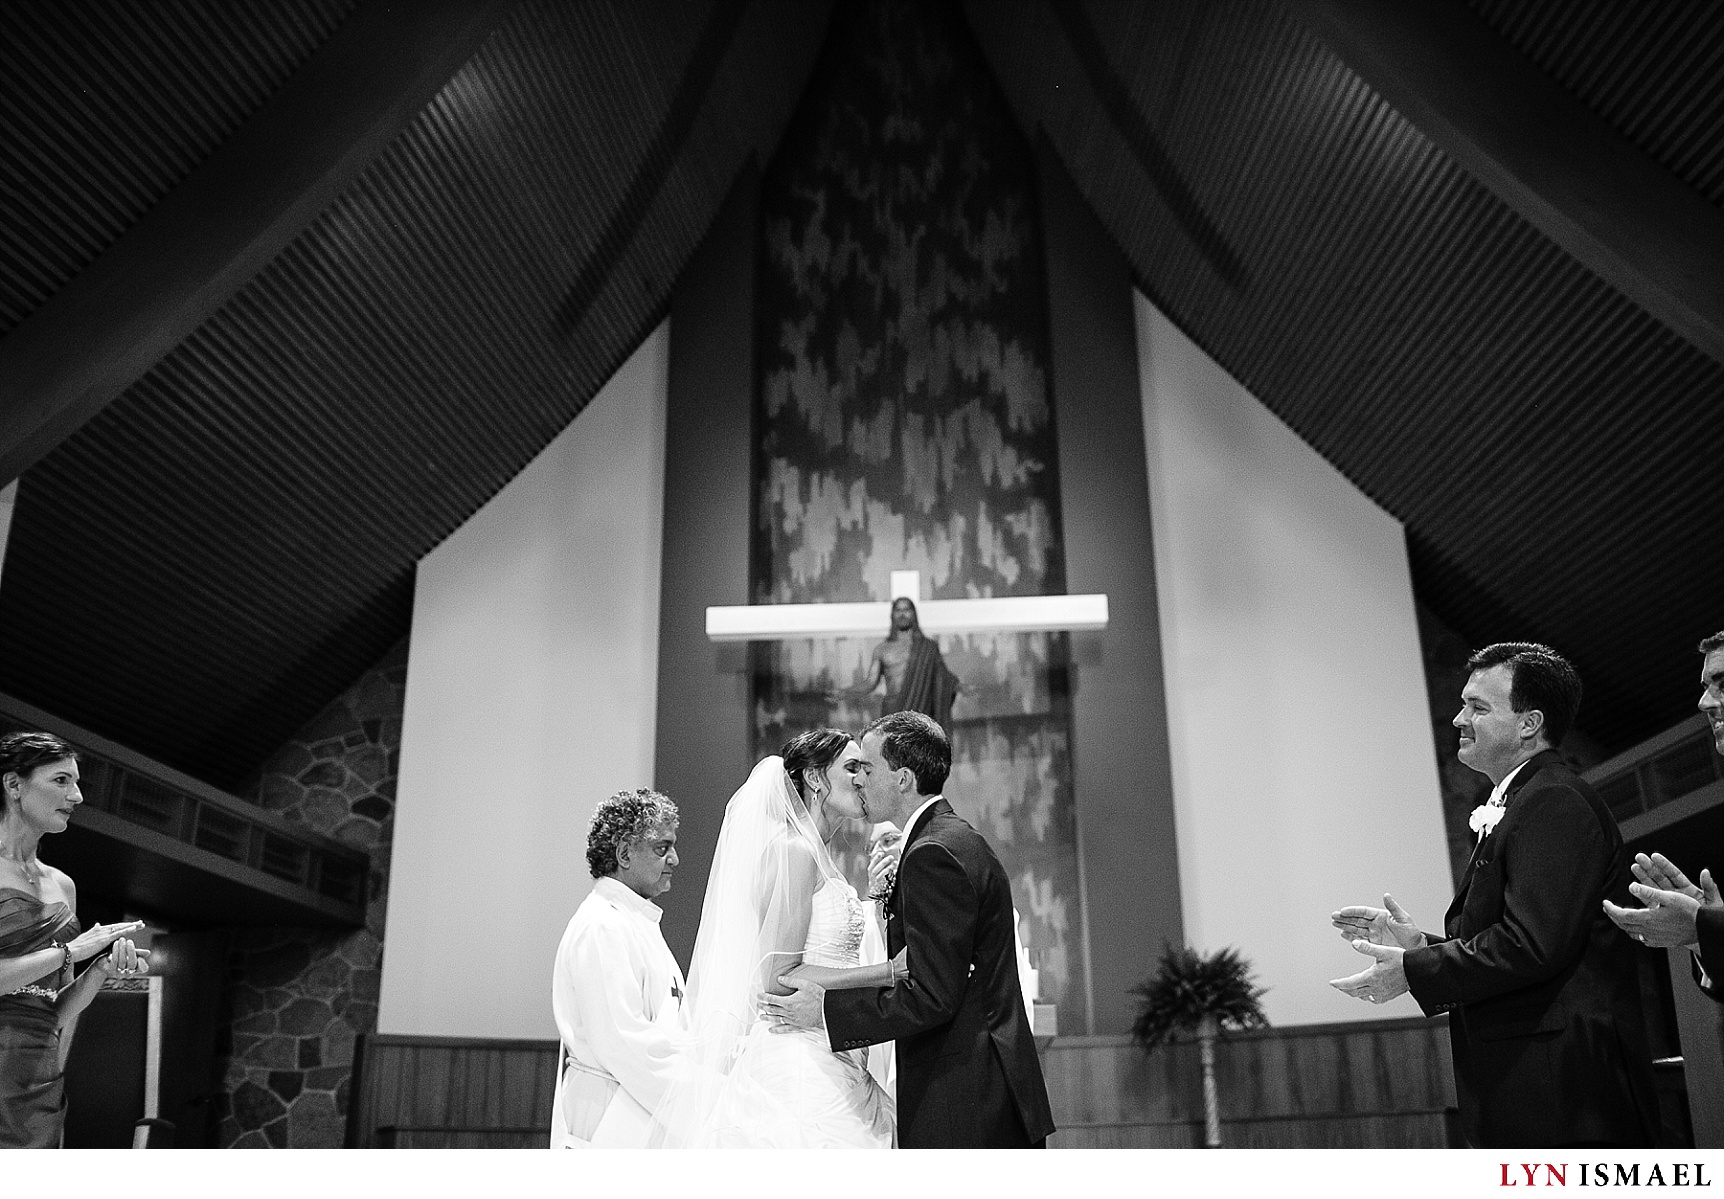 The first kiss at a Roman Catholic wedding.